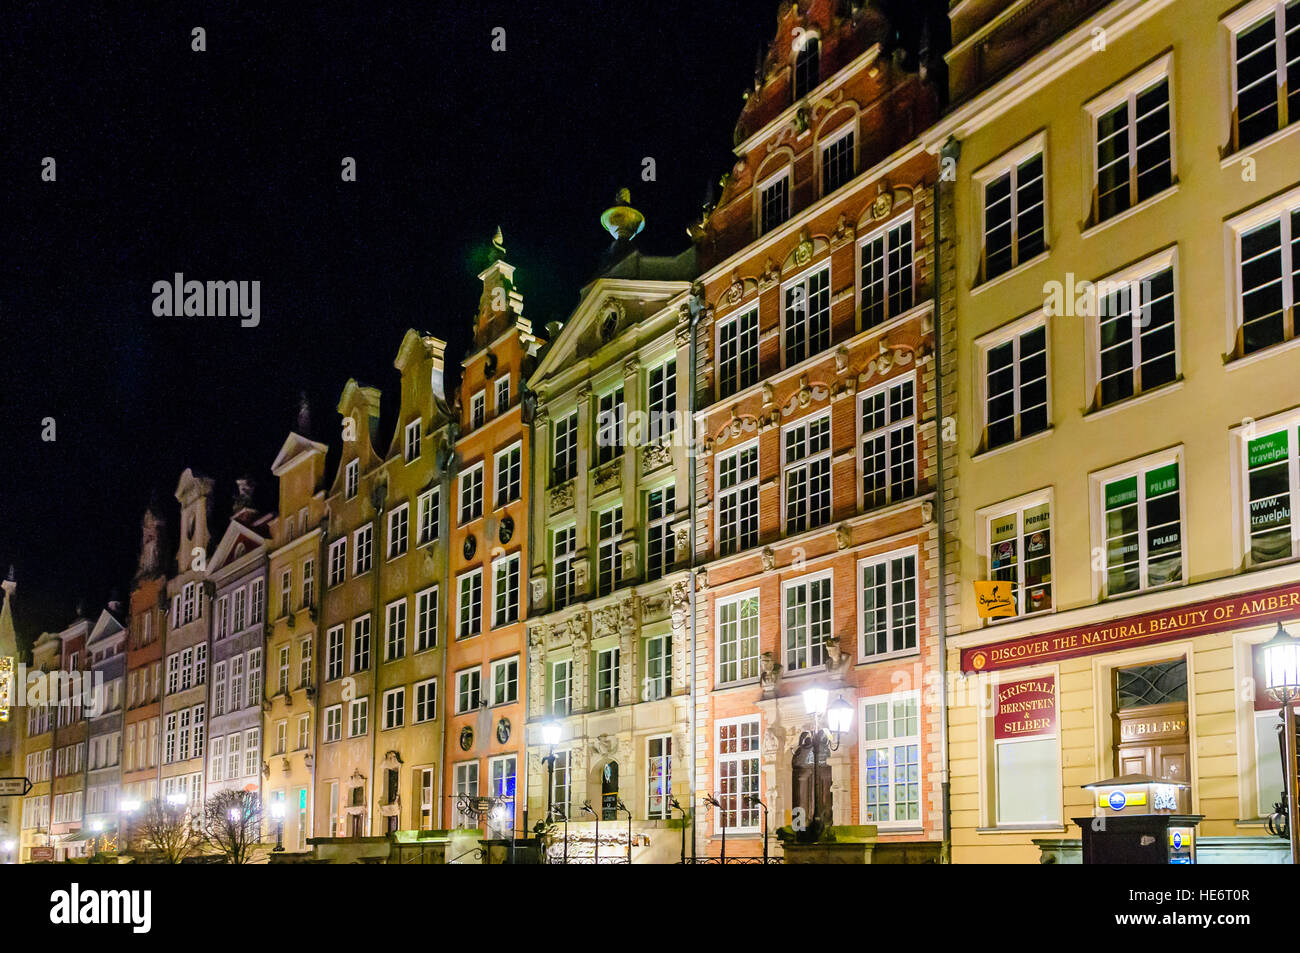 Buildings in Dluga, Dlugi Targ, Gdansk at night. Stock Photo